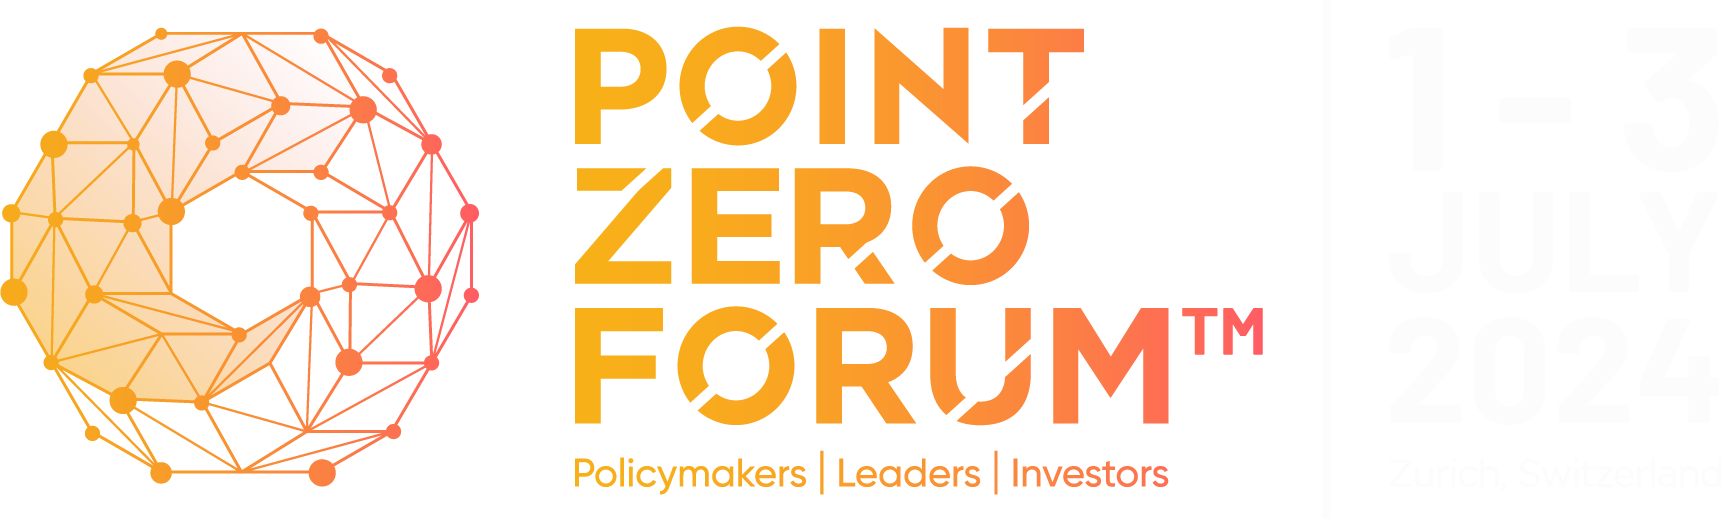 Point Zero Forum